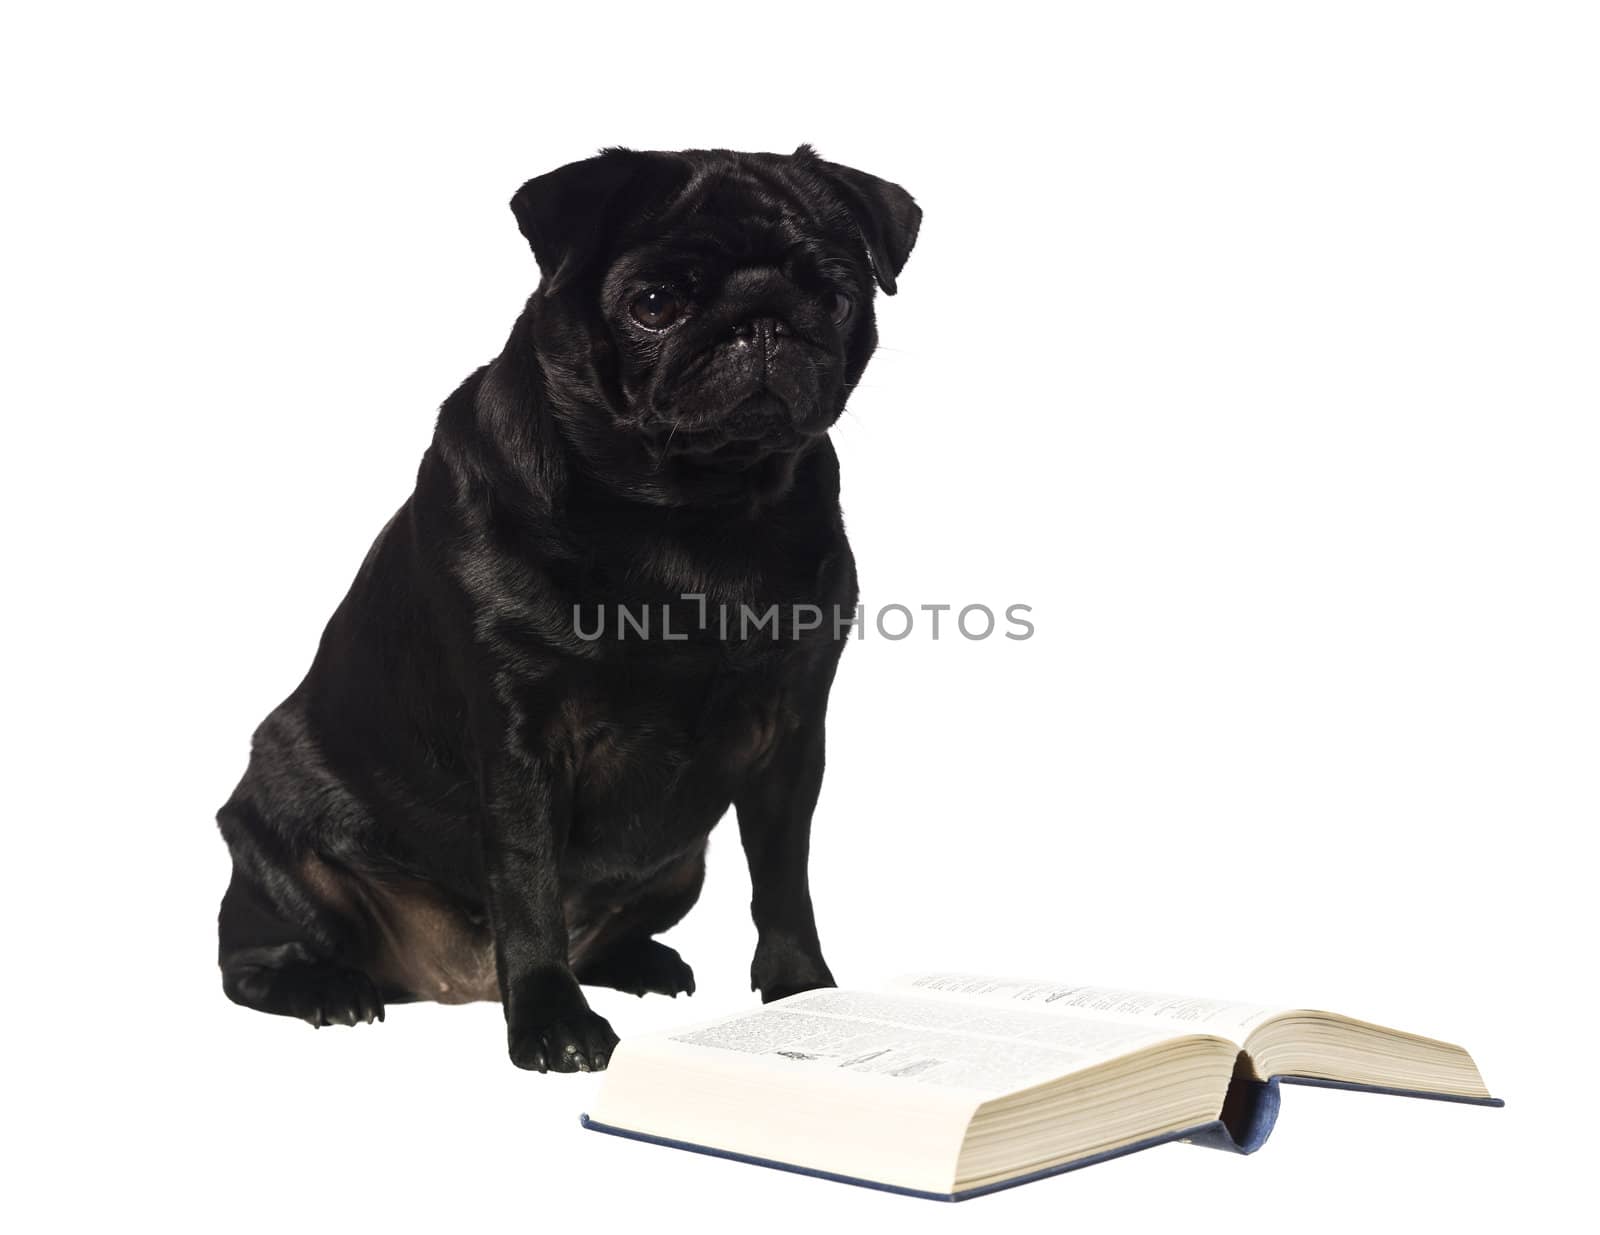 Dog reading a book by gemenacom